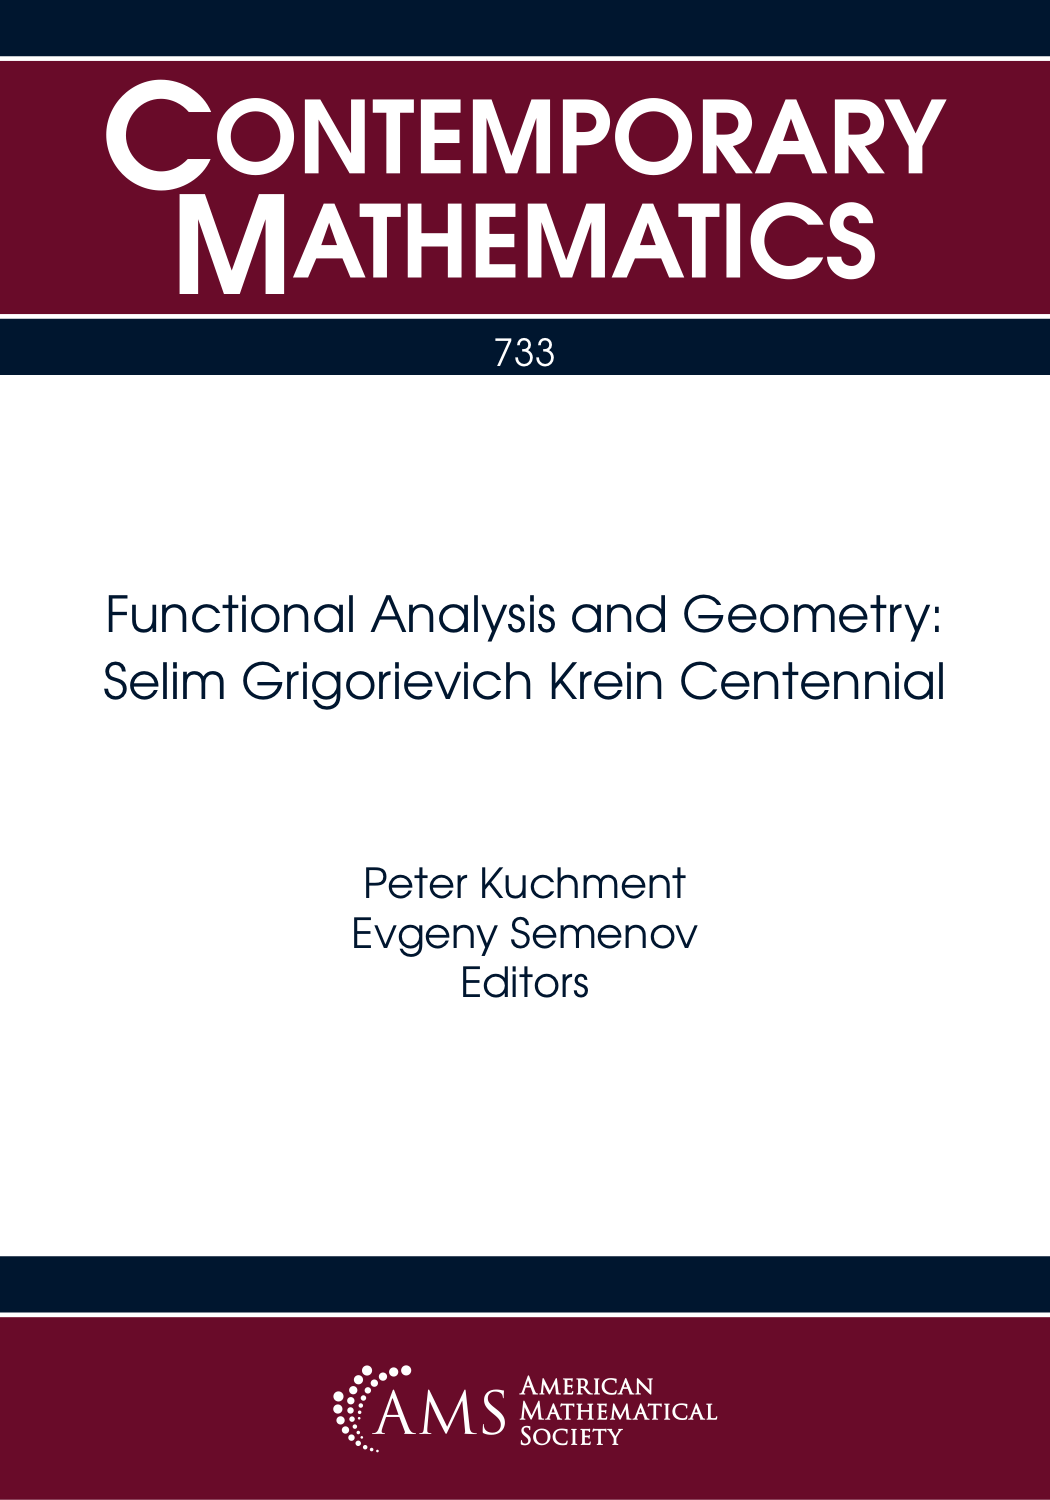 Functional Analysis and Geometry: Selim Grigorievich Krein Centennial